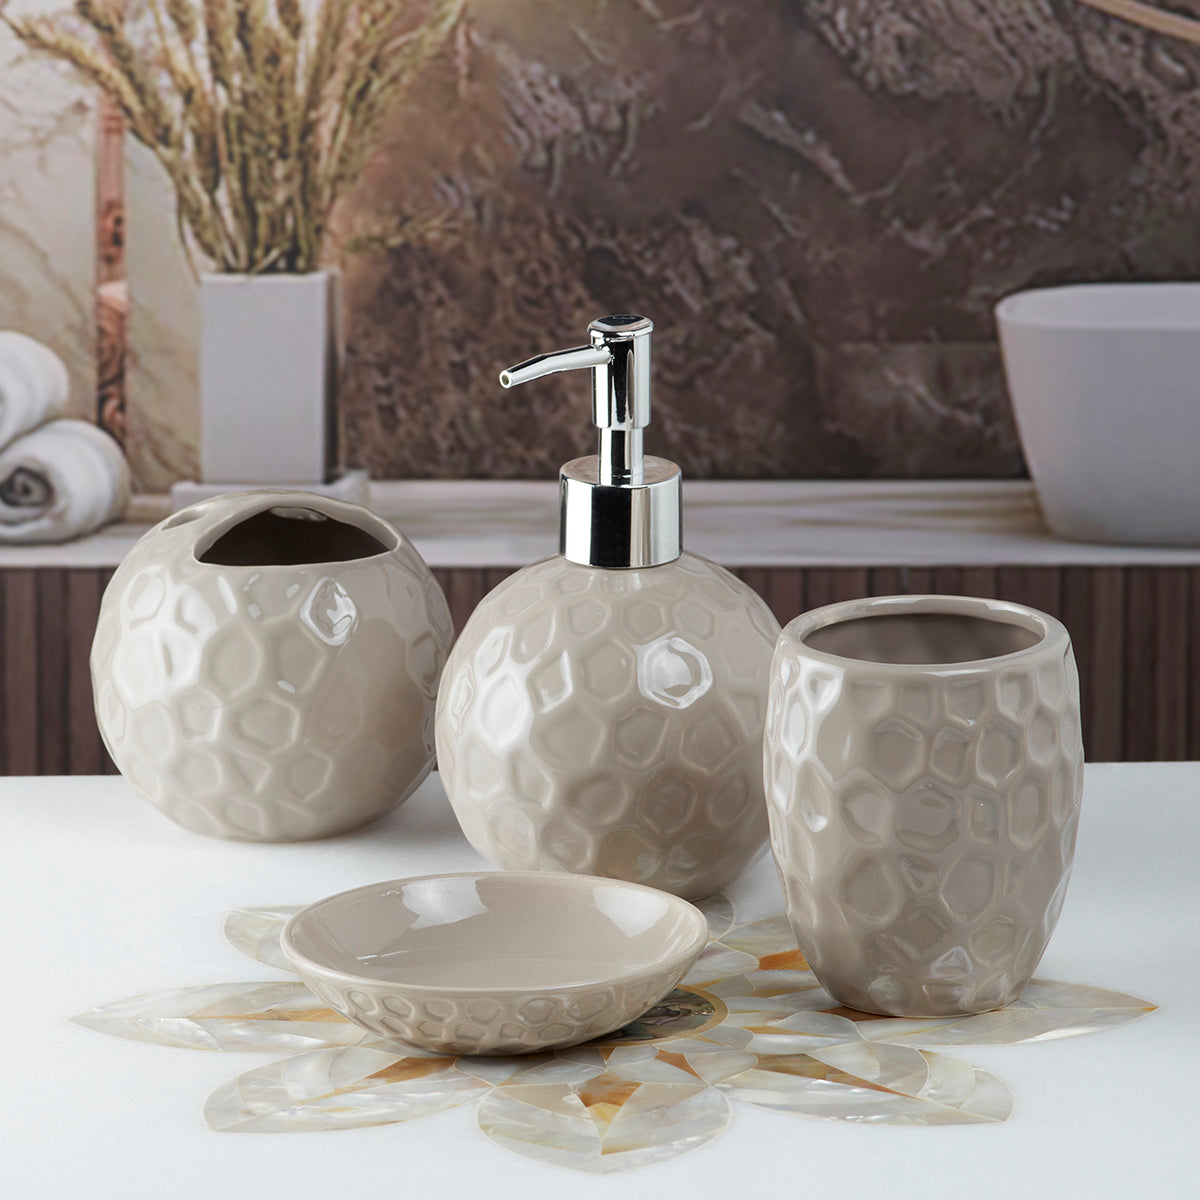 Ceramic Bathroom Accessories Set of 4 Bath Set with Soap Dispenser (10118)